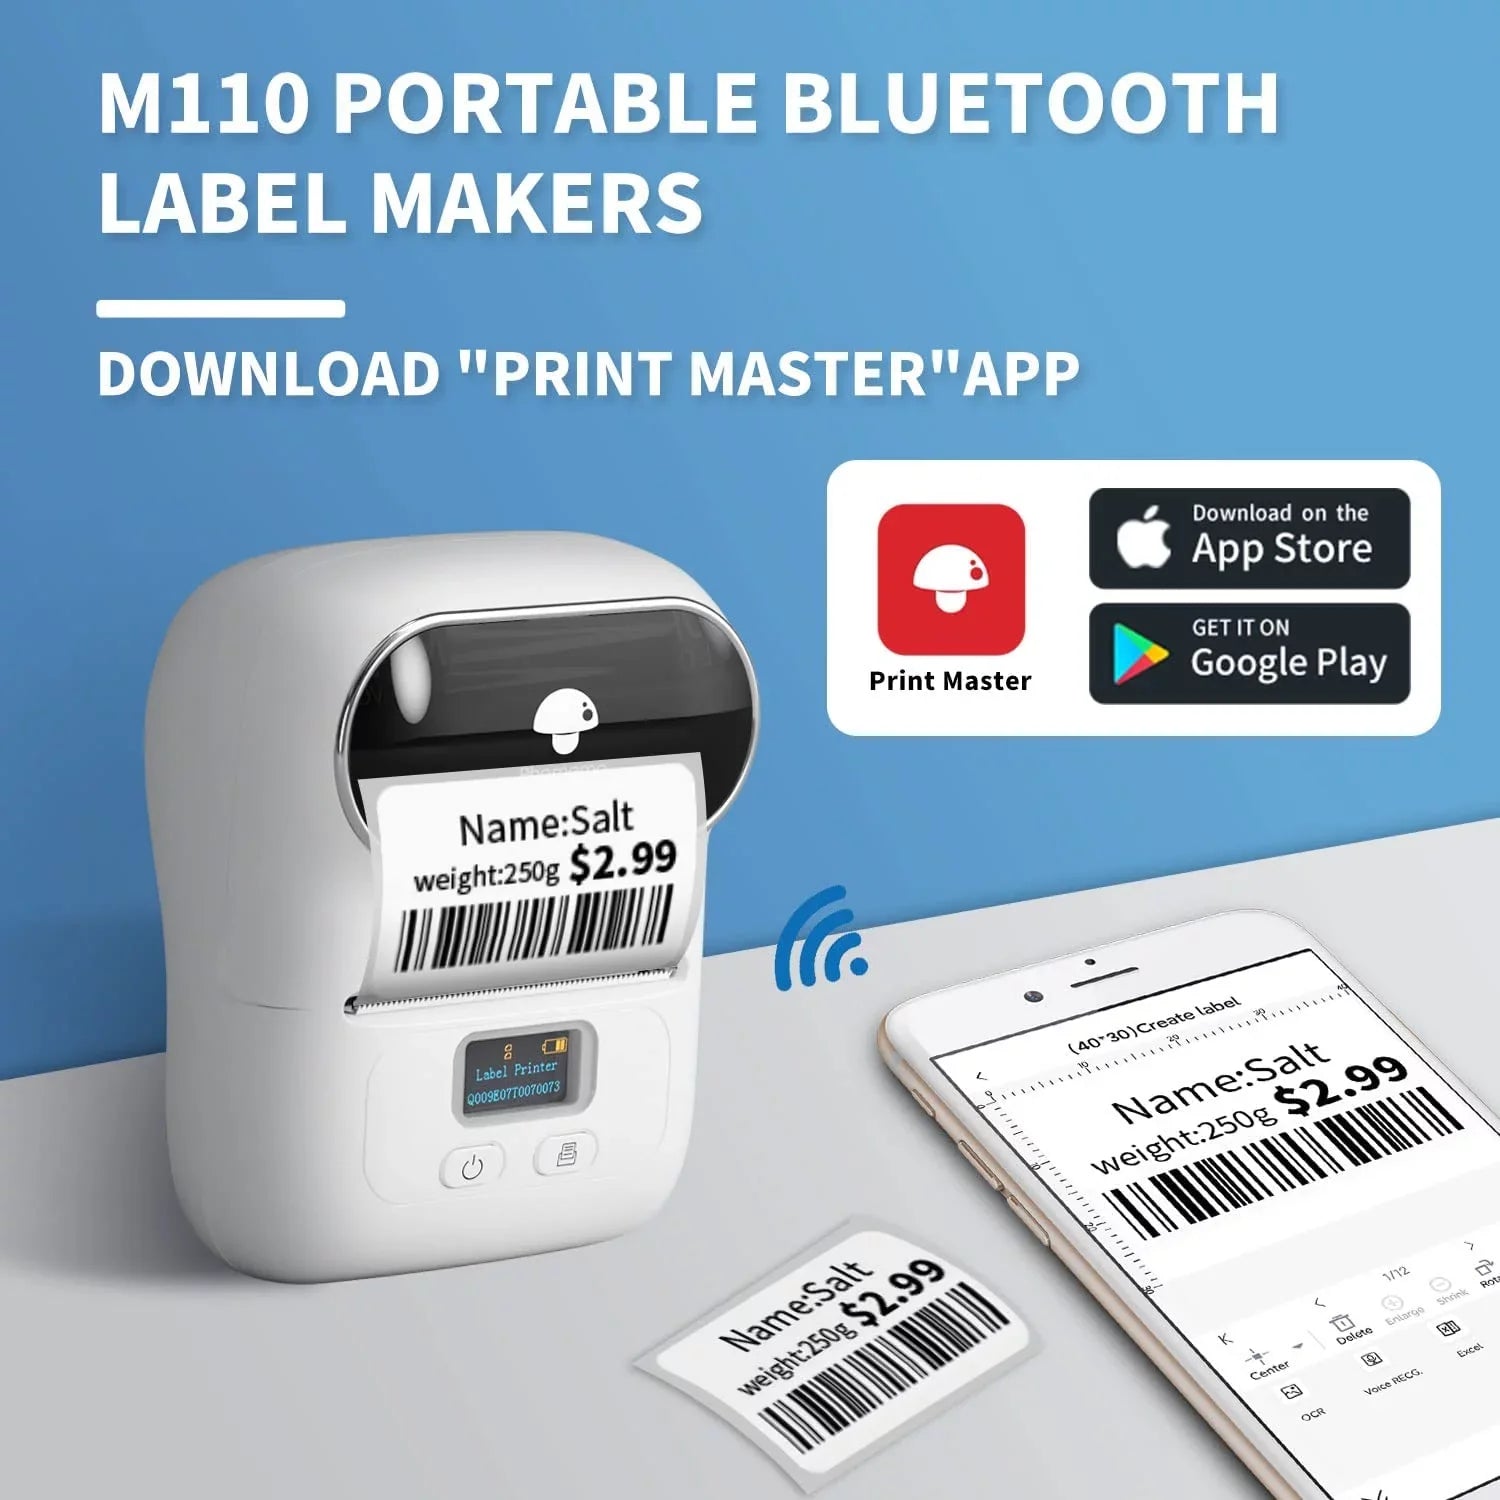 Phomemo M110 Bluetooth Label Printer With 3Rolls / Orange